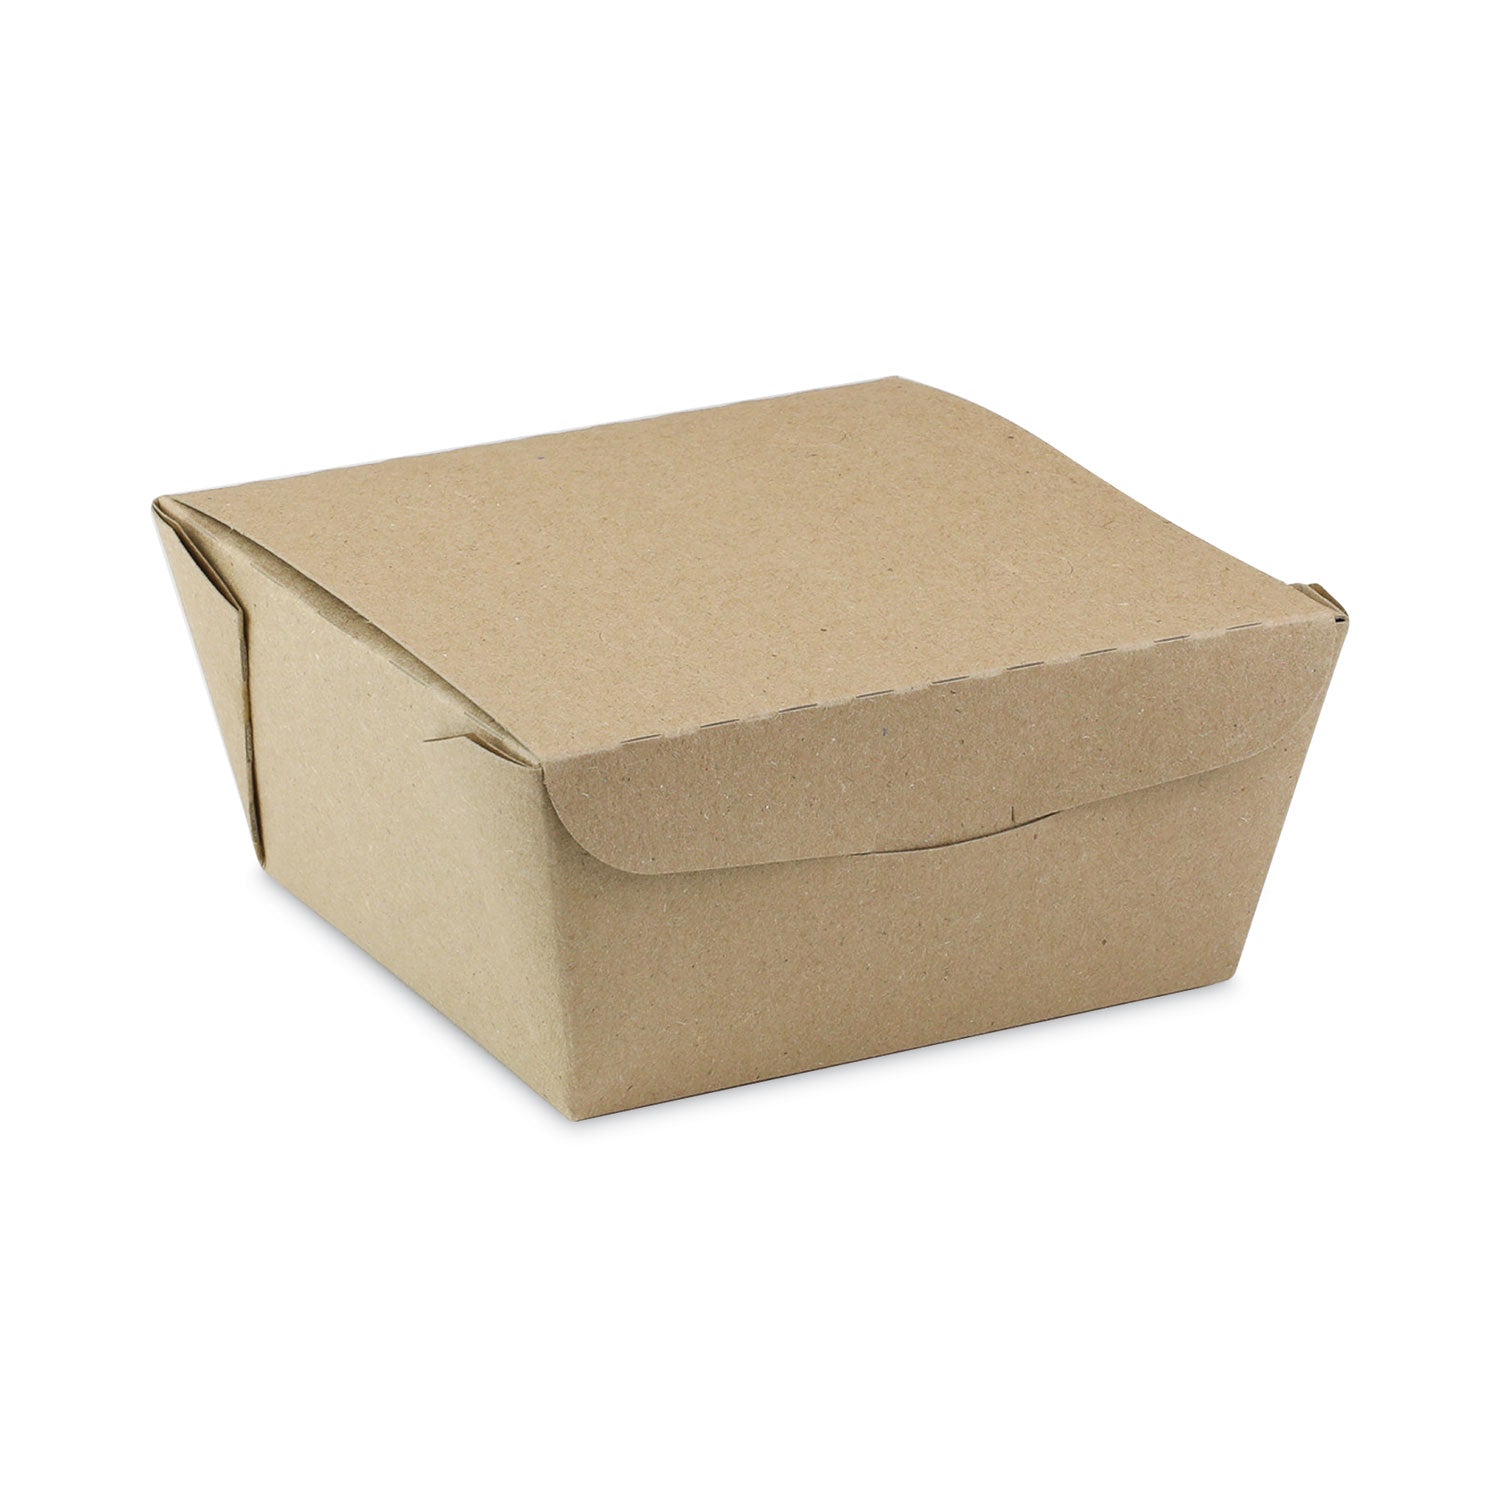 earthchoice-onebox-paper-box-37-oz-45-x-45-x-25-kraft-312-carton_pctnob01kec - 1